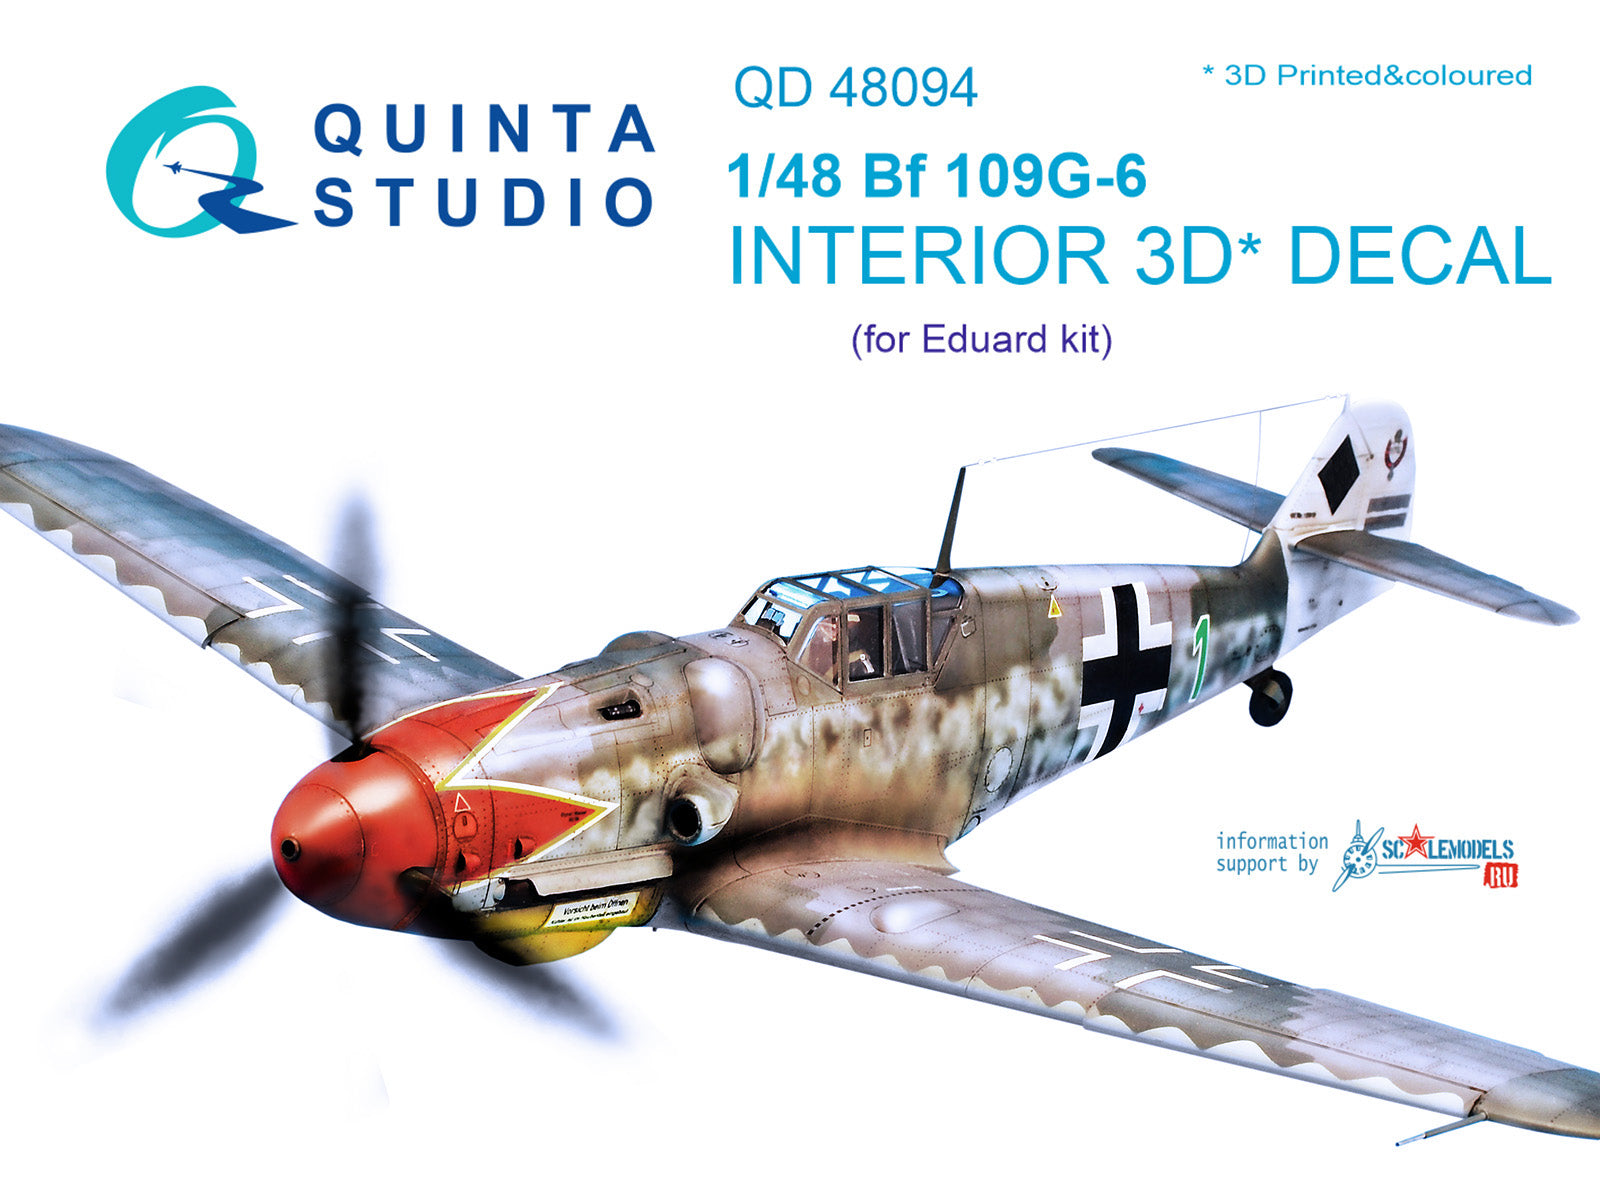 Quinta Studio - 1/48 Bf 109G-6 - QD48094 for Eduard kit